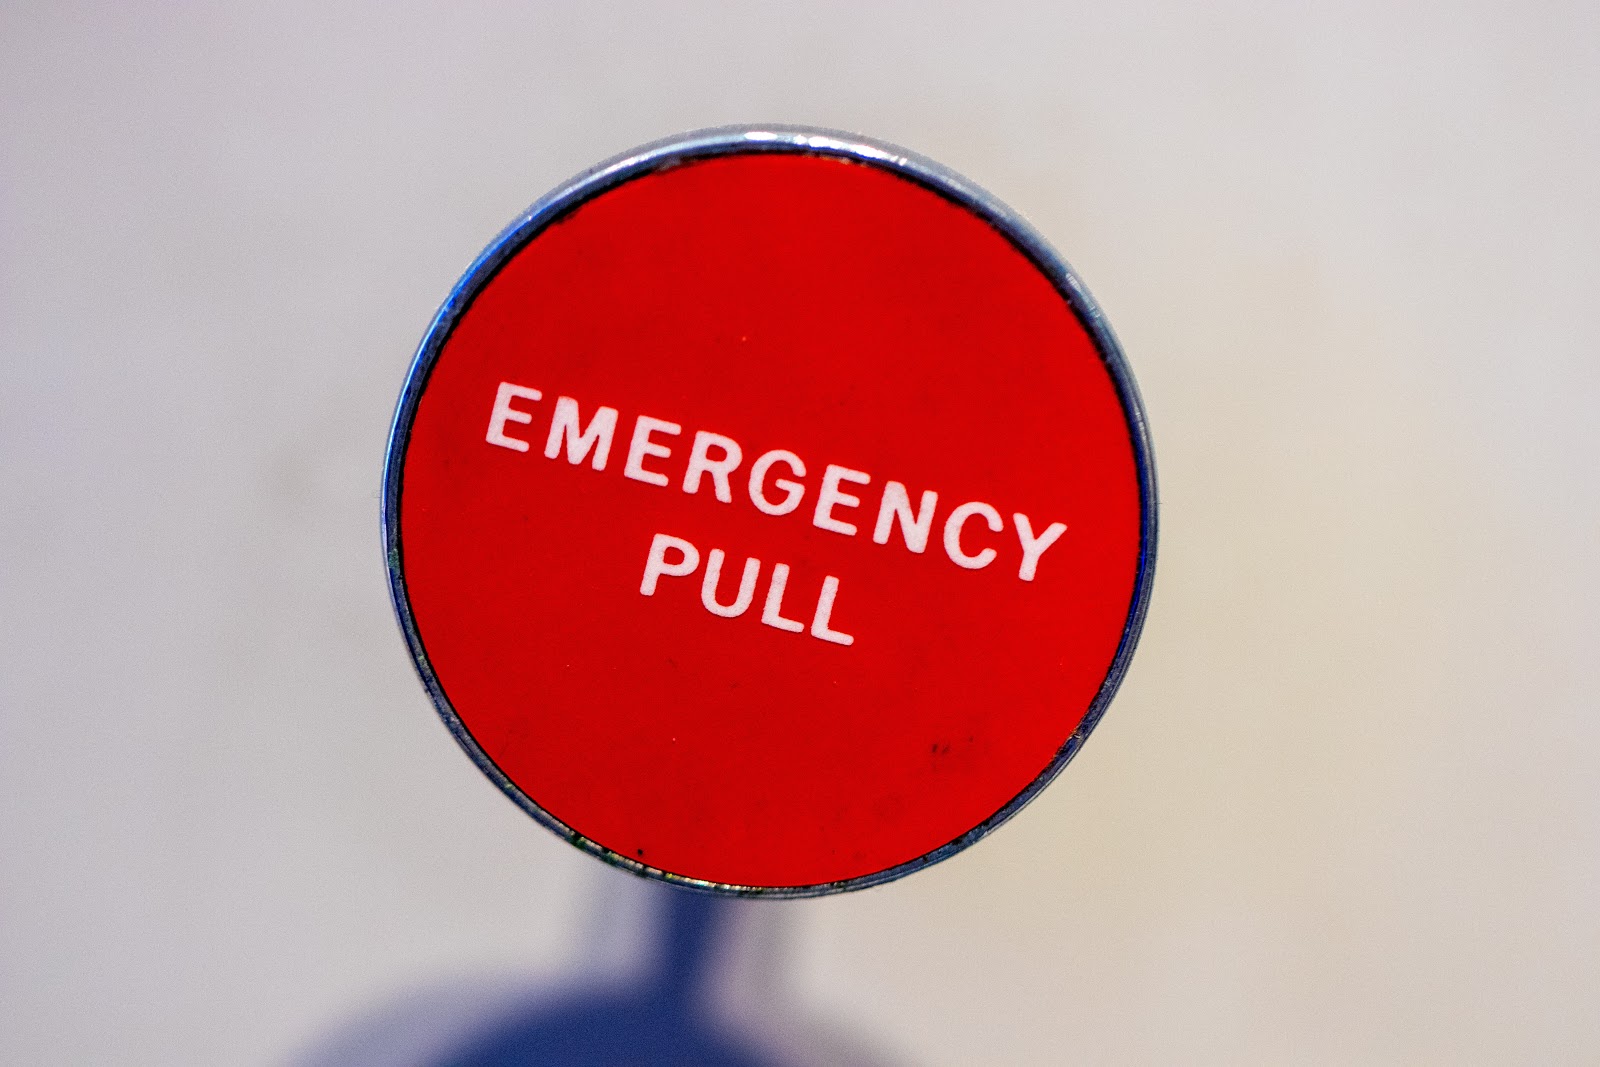 Pull in case of emergency